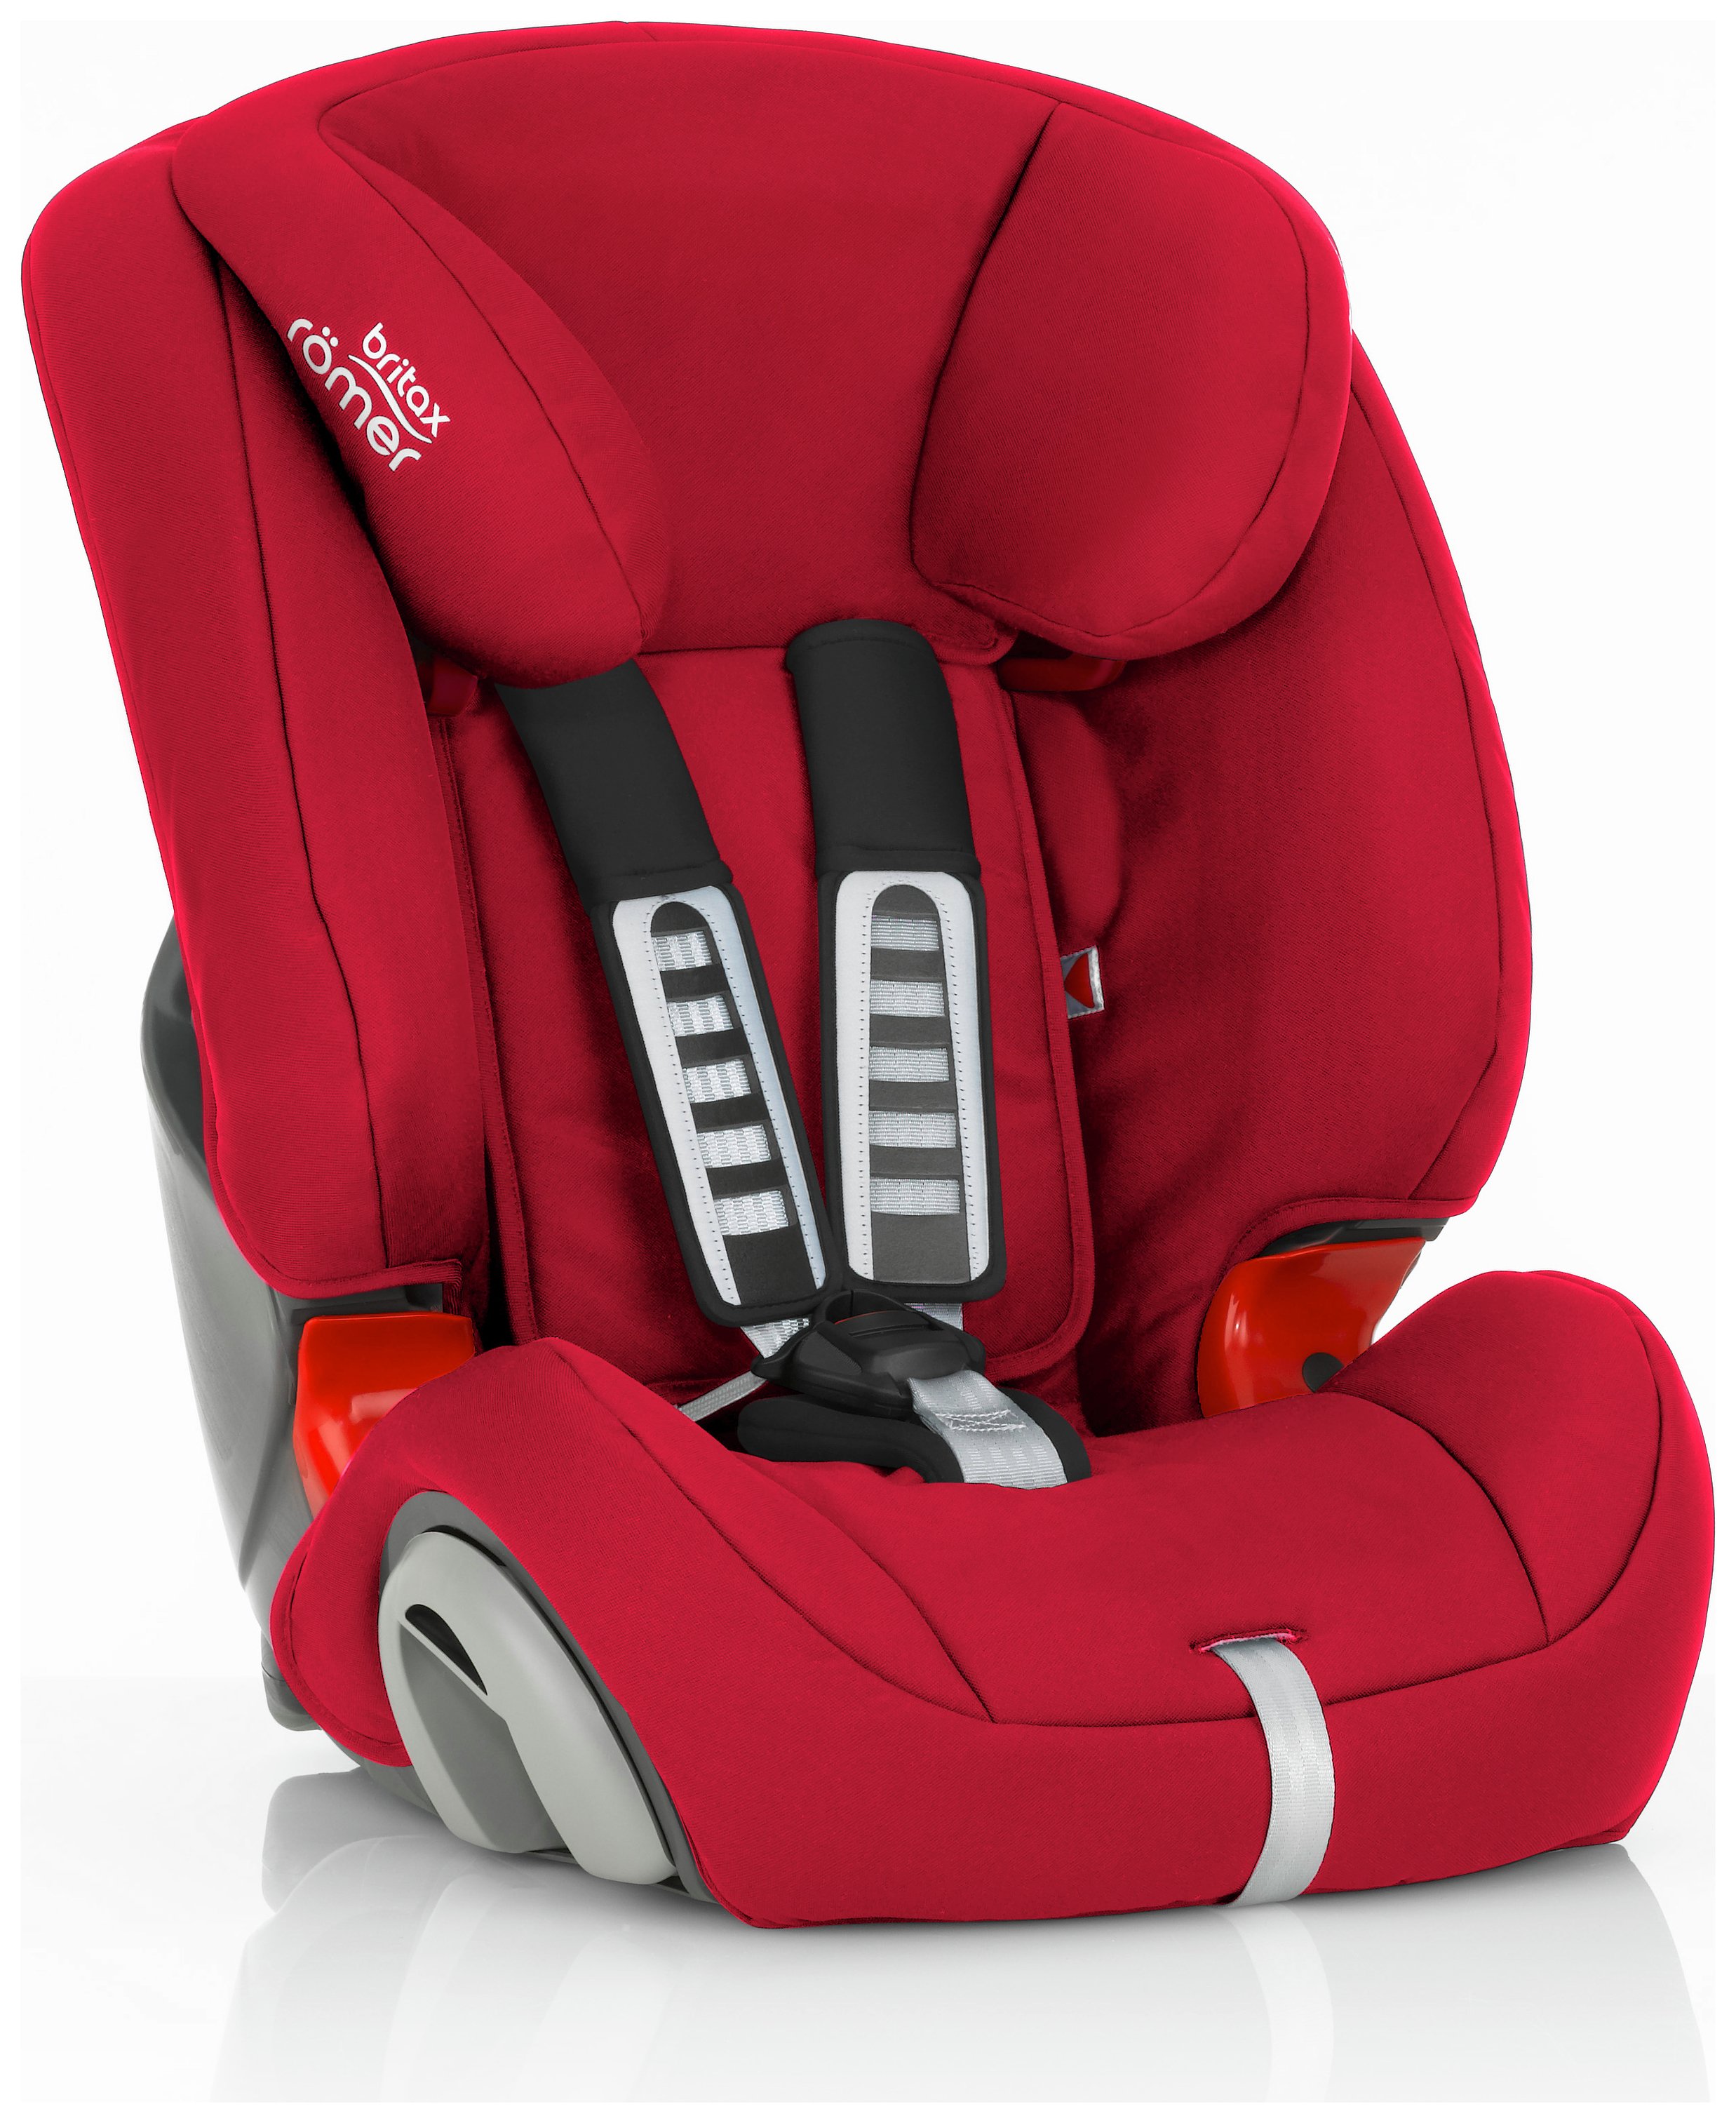 Britax Romer EVOLVA 1-2-3 Car Seat - Flame Red Reviews